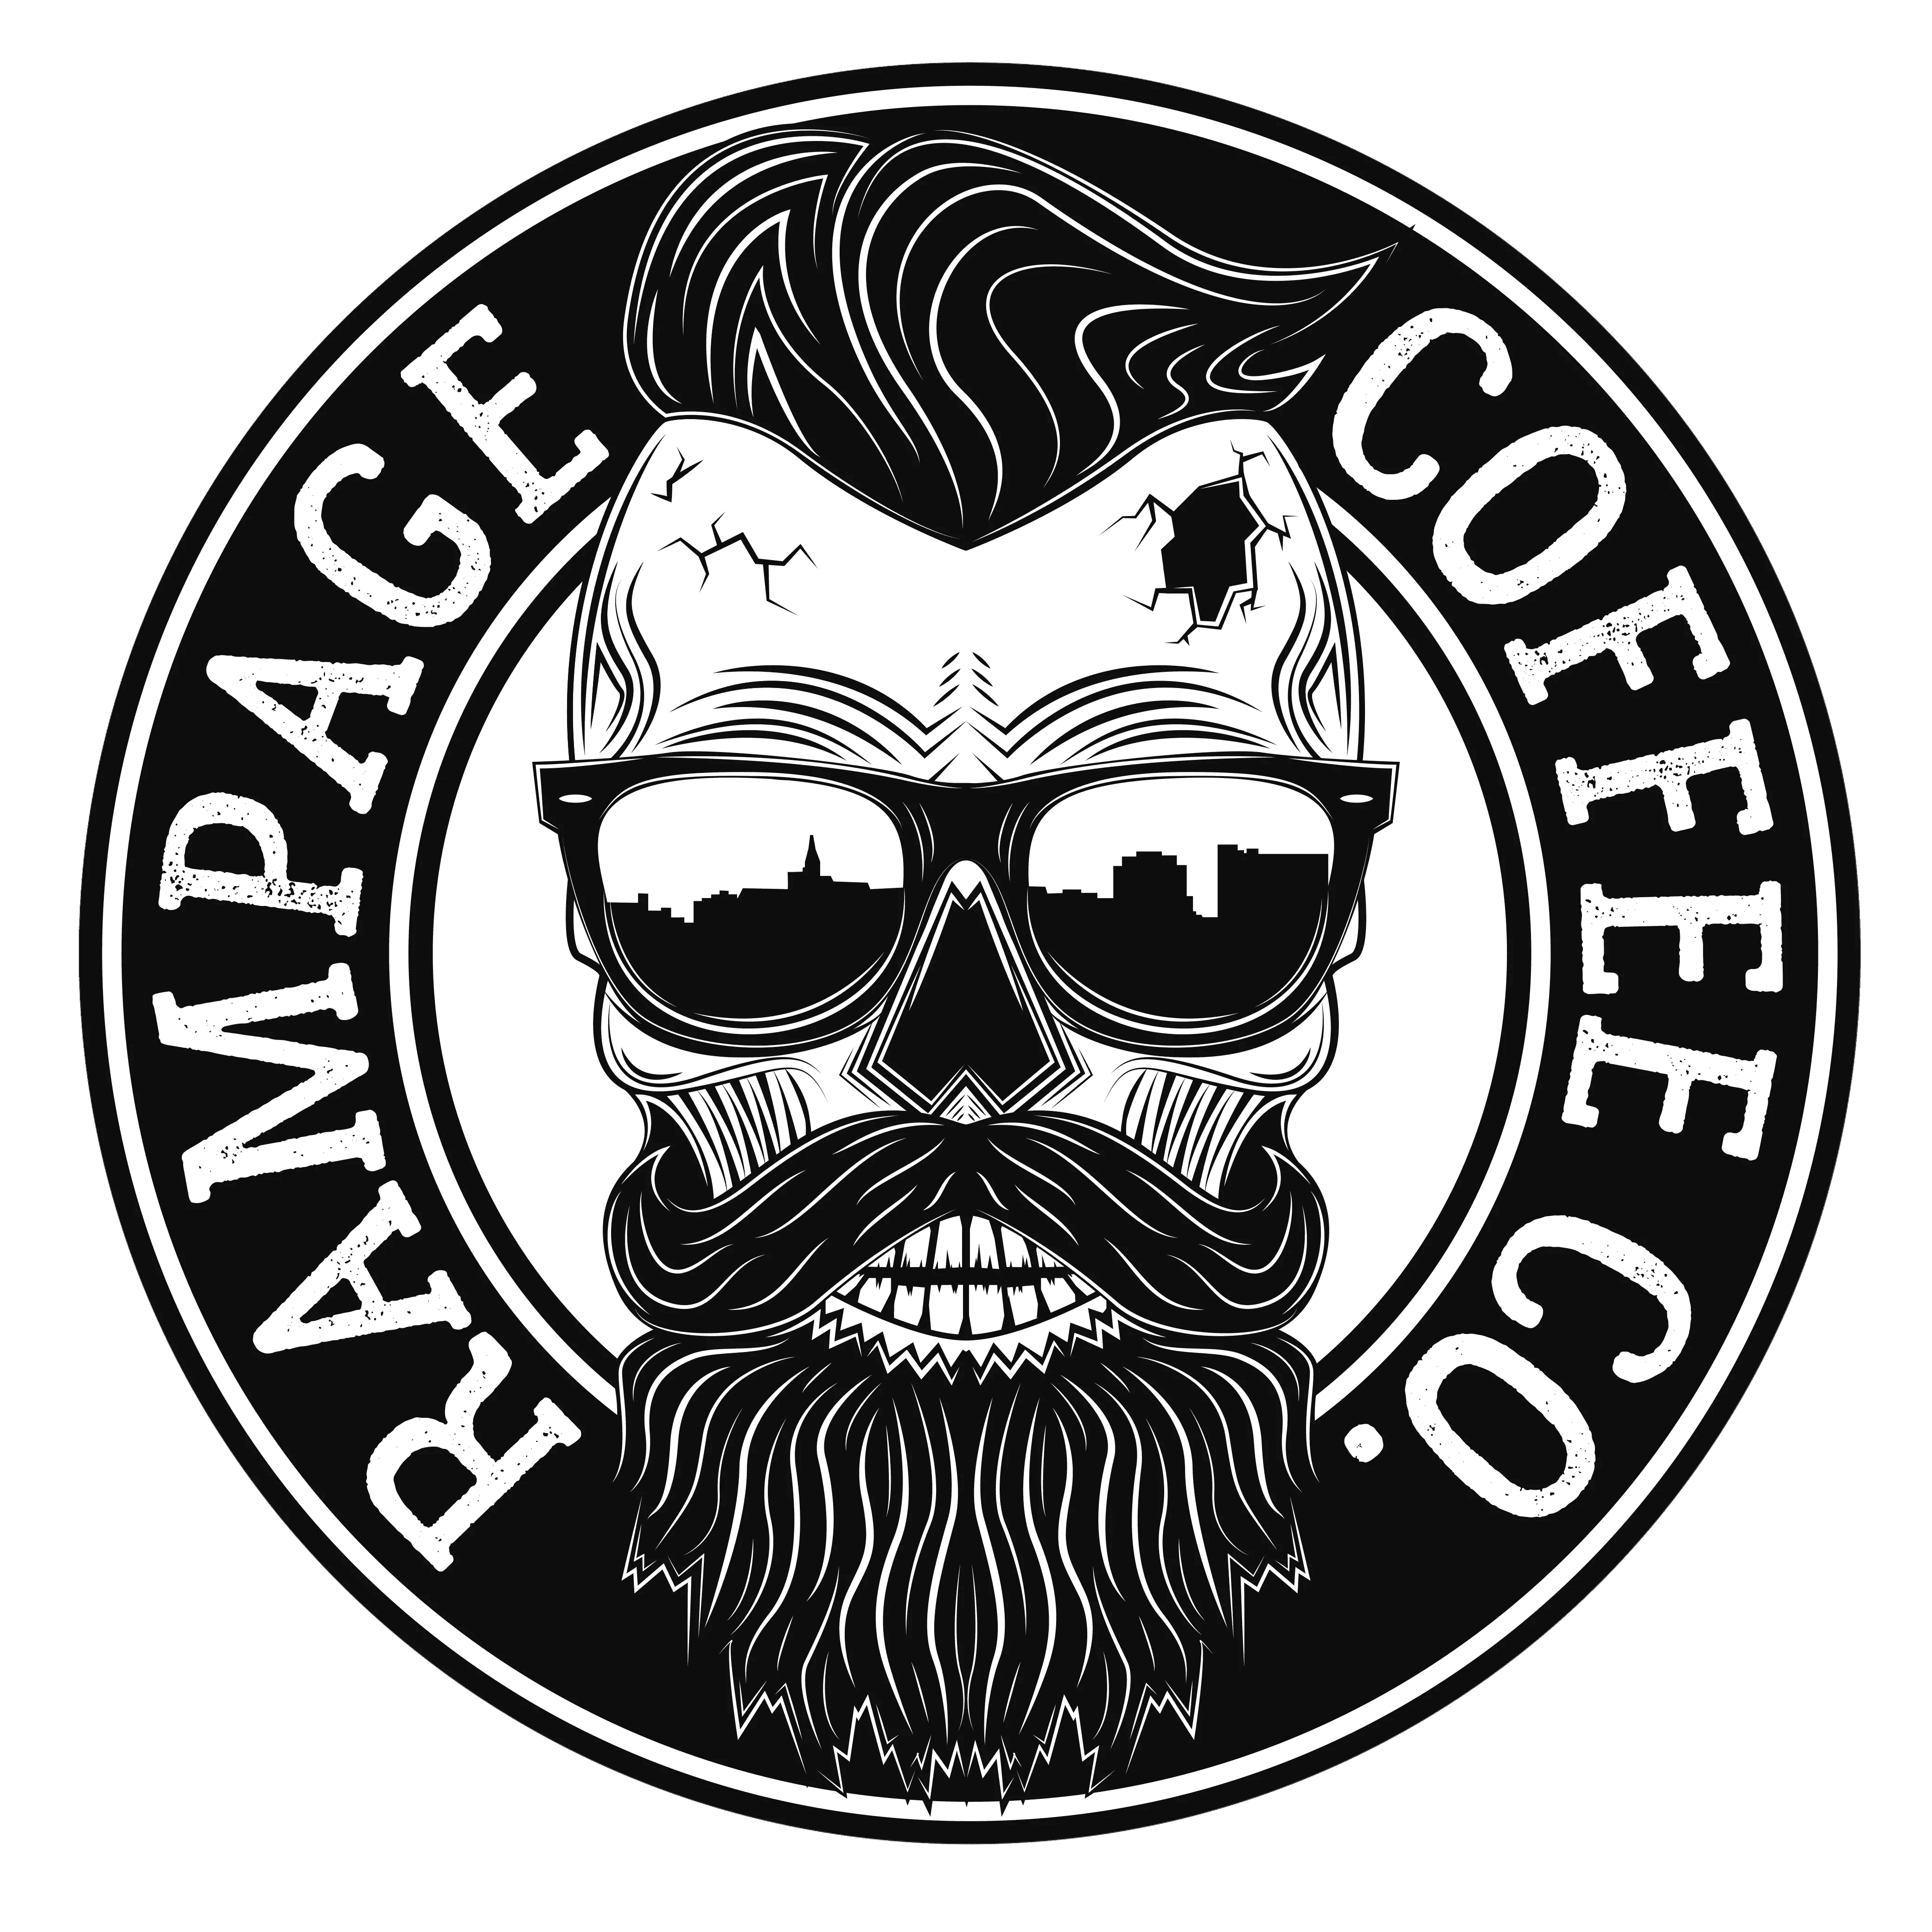 Rampage Coffee Co.